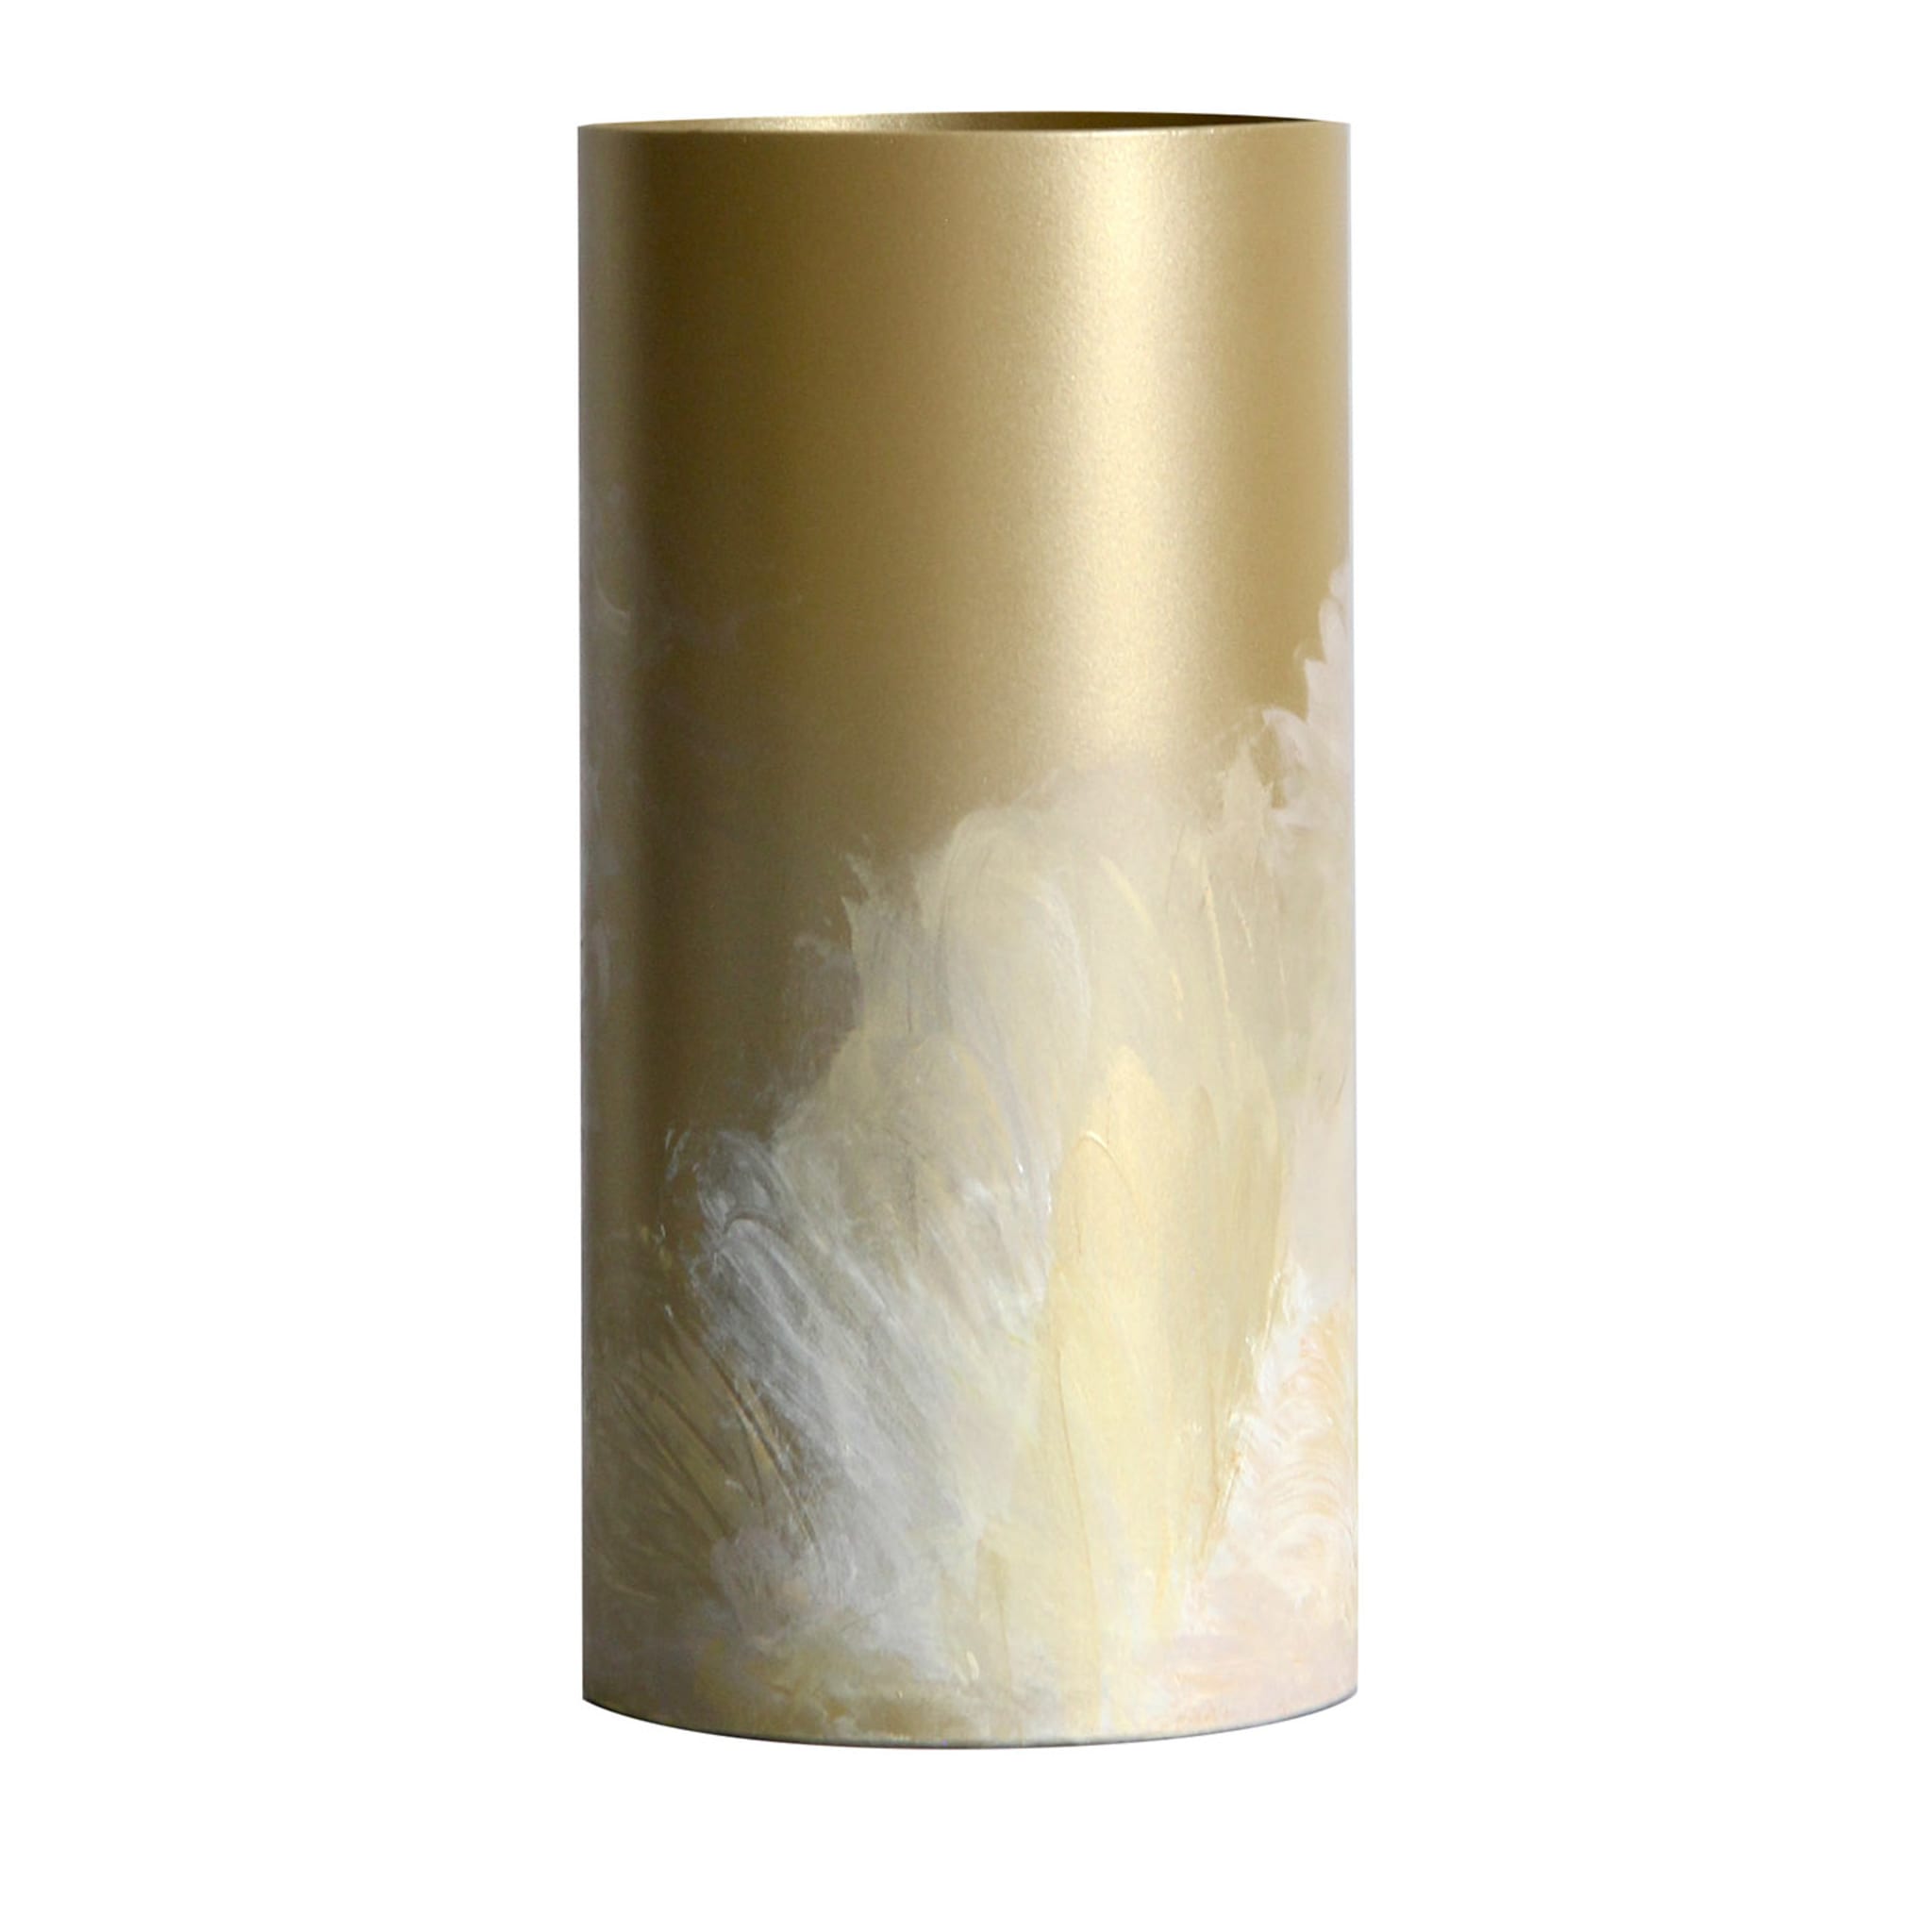 Flora M Cylindrical Golden Vase by Gabriela Azar Rubagotti #3 - Main view